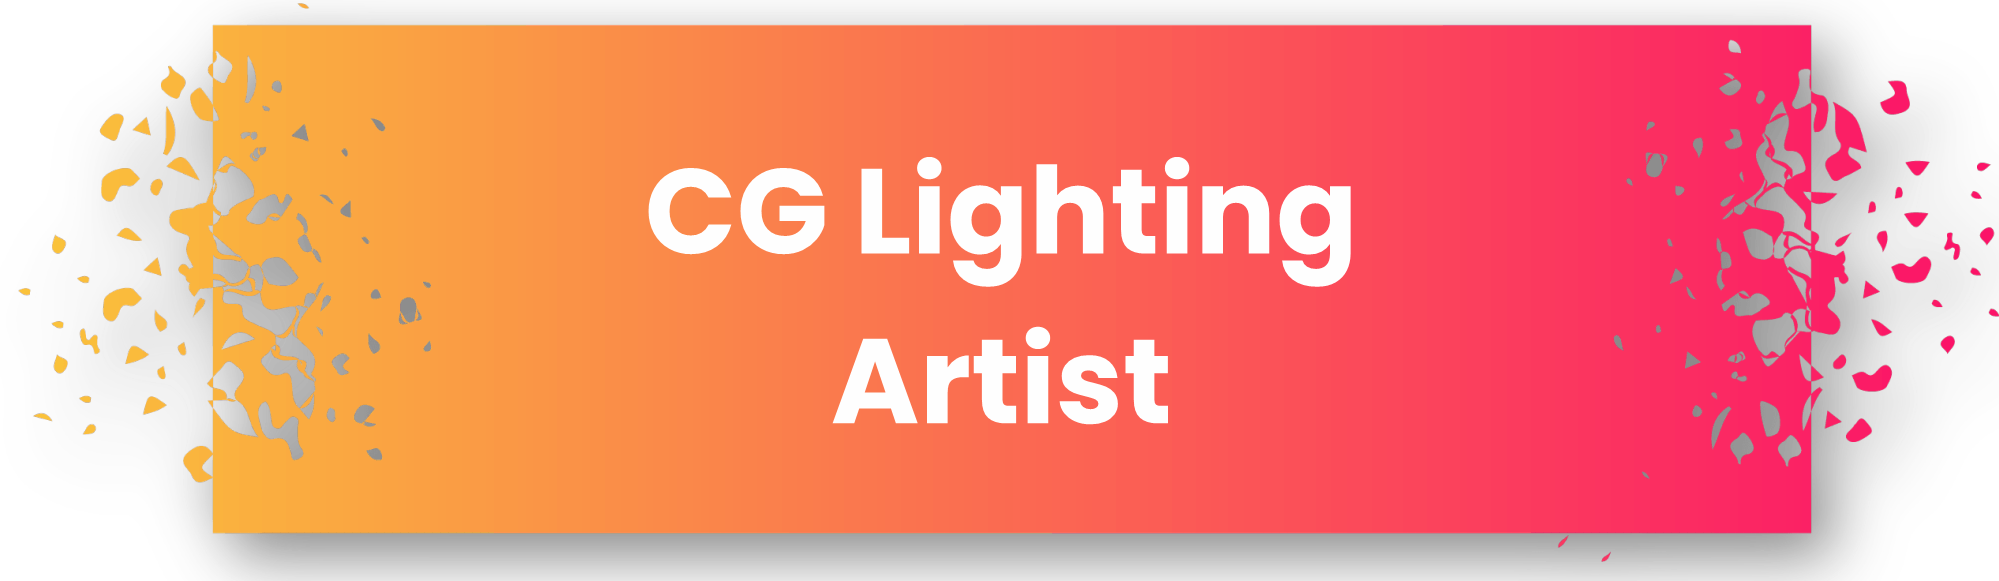 CG Lighting